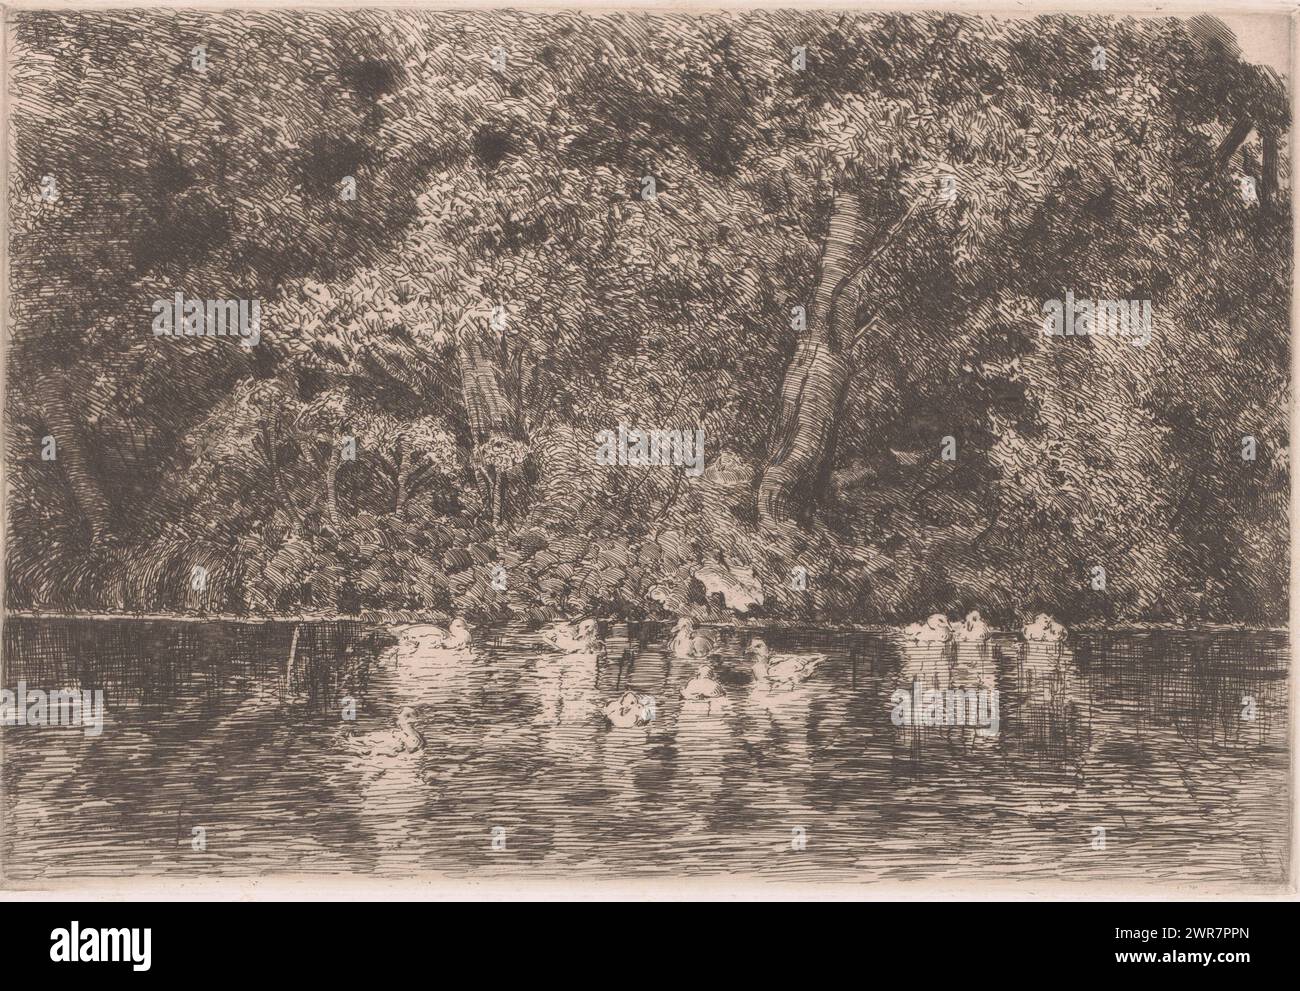 Teich mit Enten, Druckerei: Jules Guiette, 1862 - 1901, Papier, Ätzen, Trockenspitze, Höhe 215 mm x Breite 315 mm, bedruckt Stockfoto